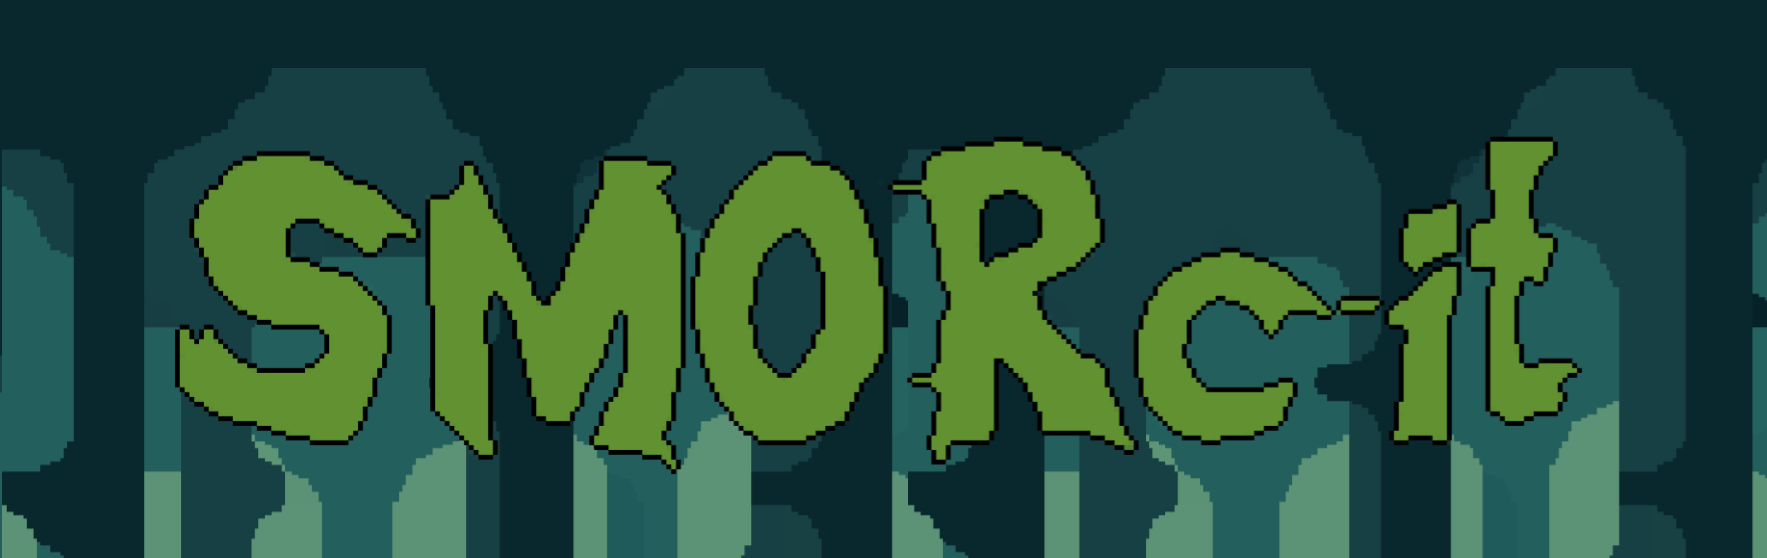 Smorc-it